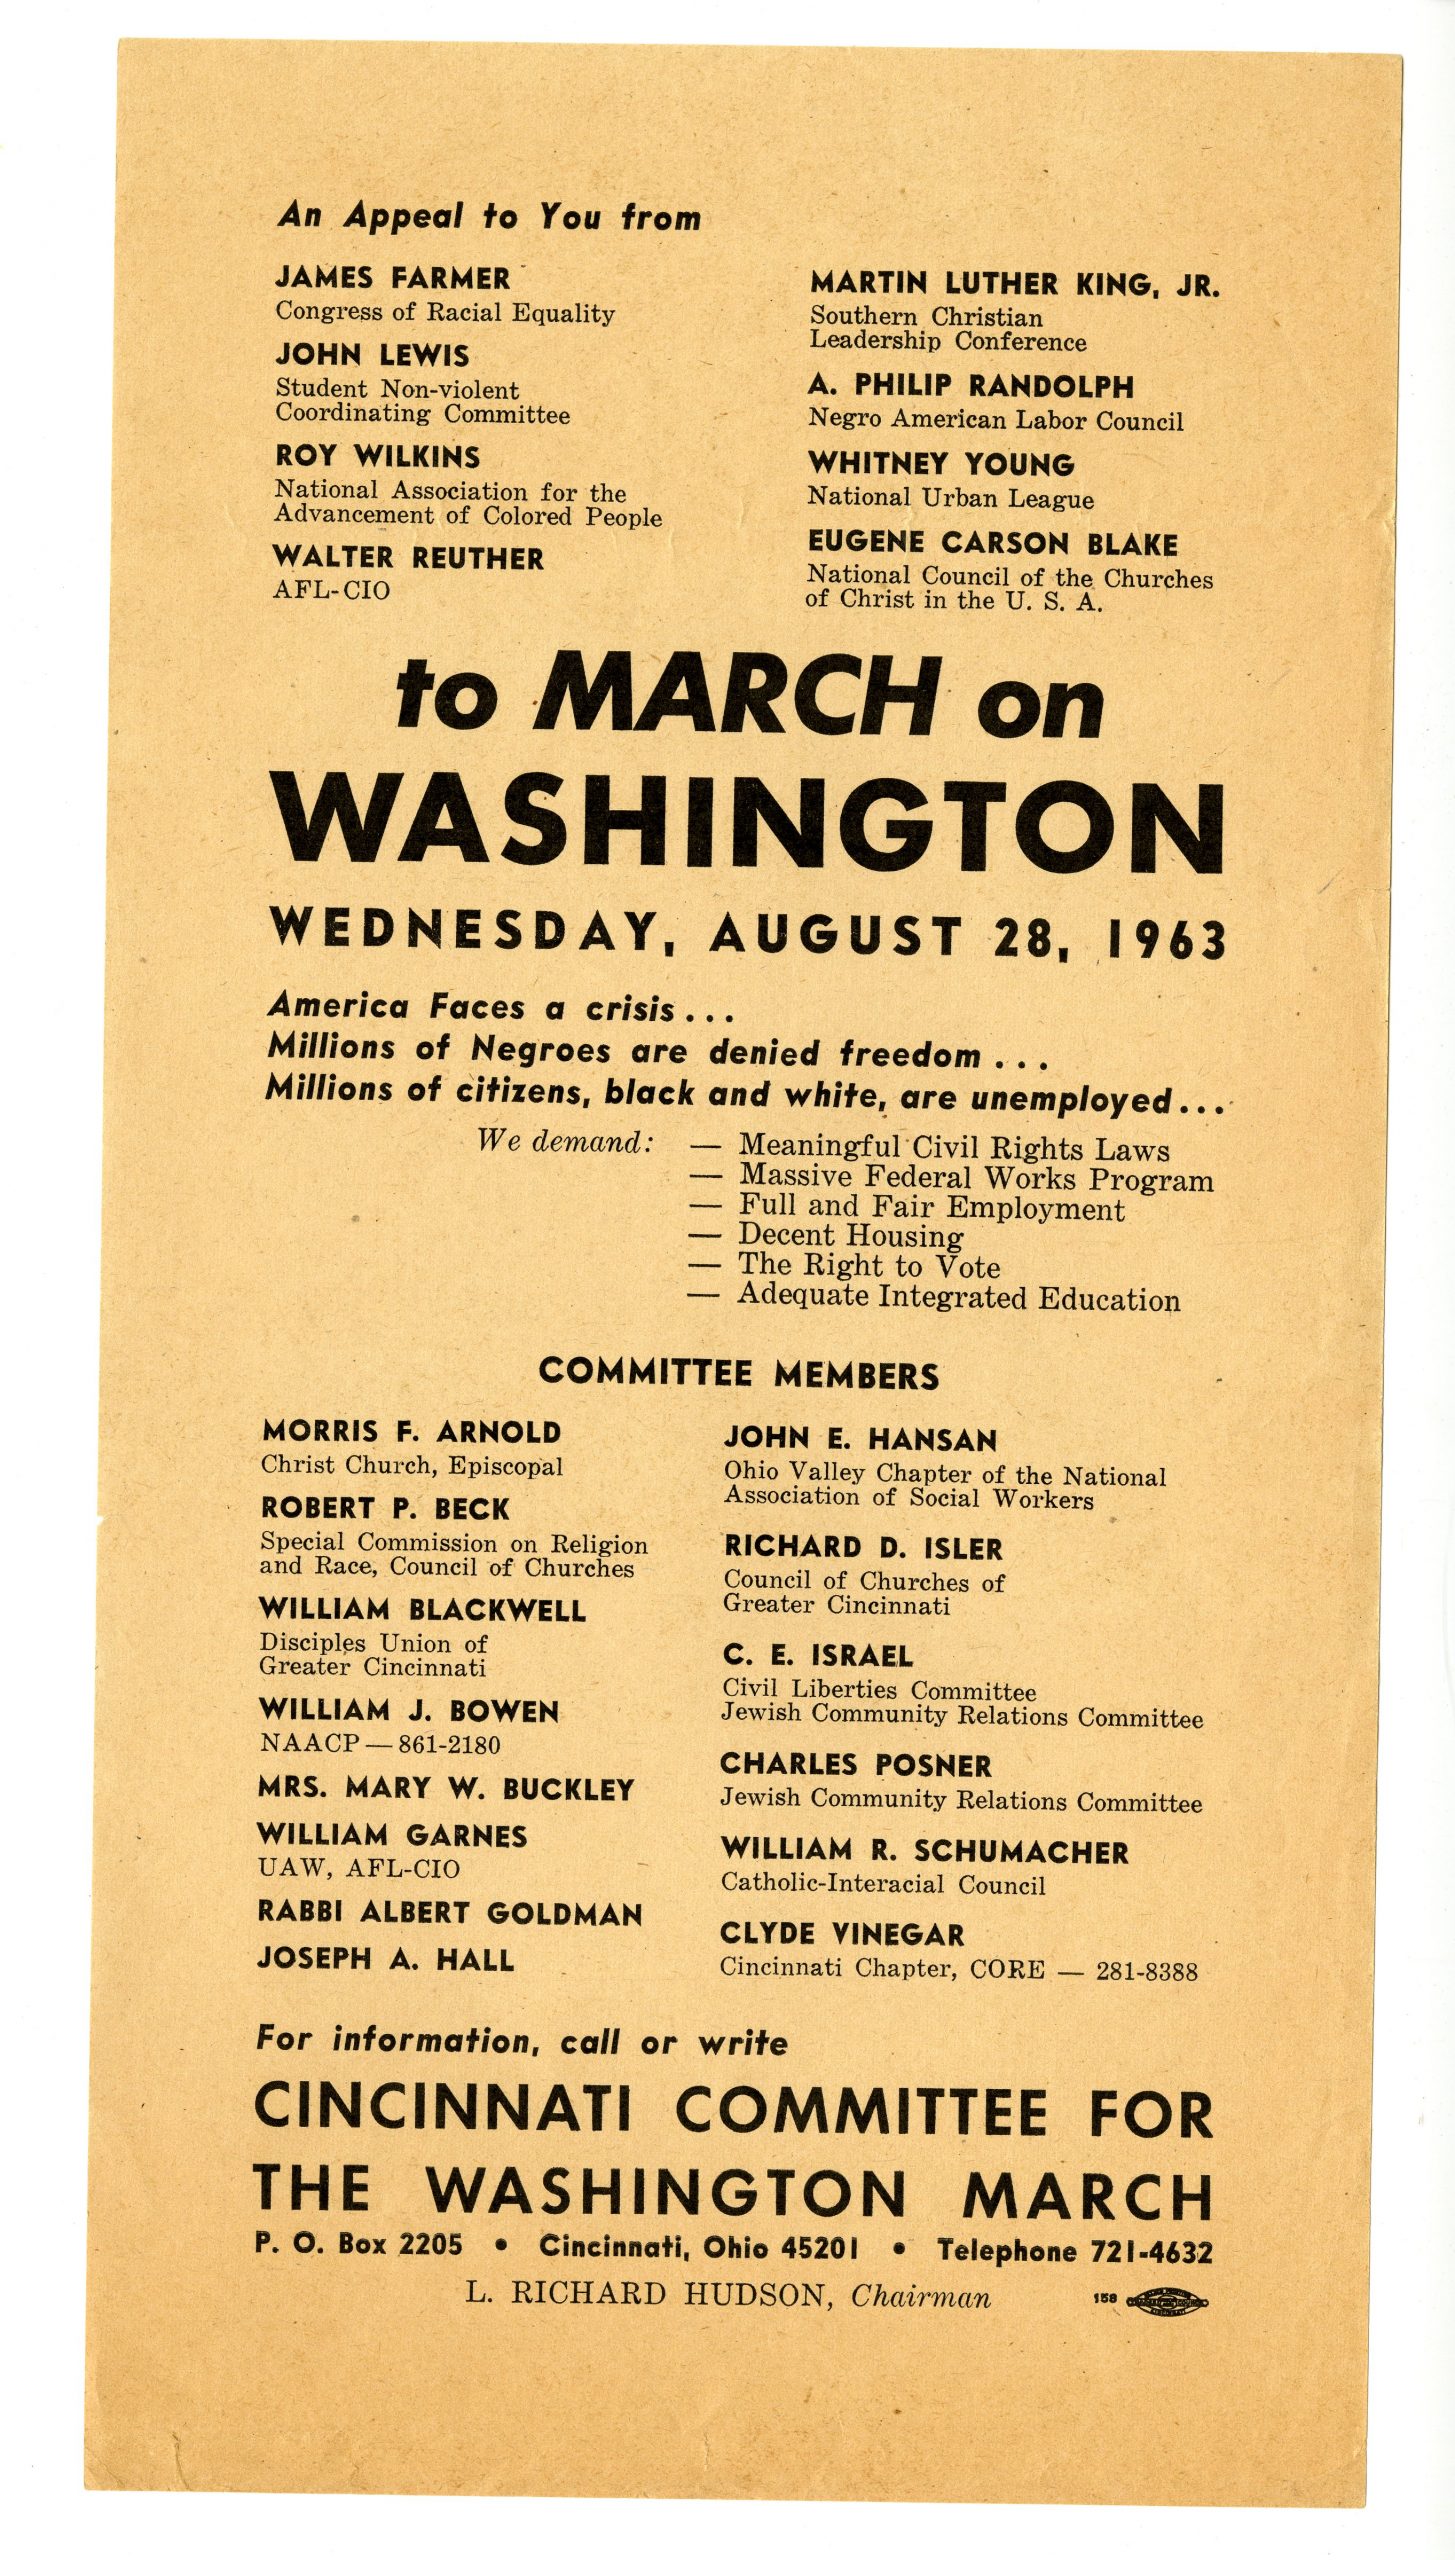 The Washington March Special: Cincinnati Marches on Washington